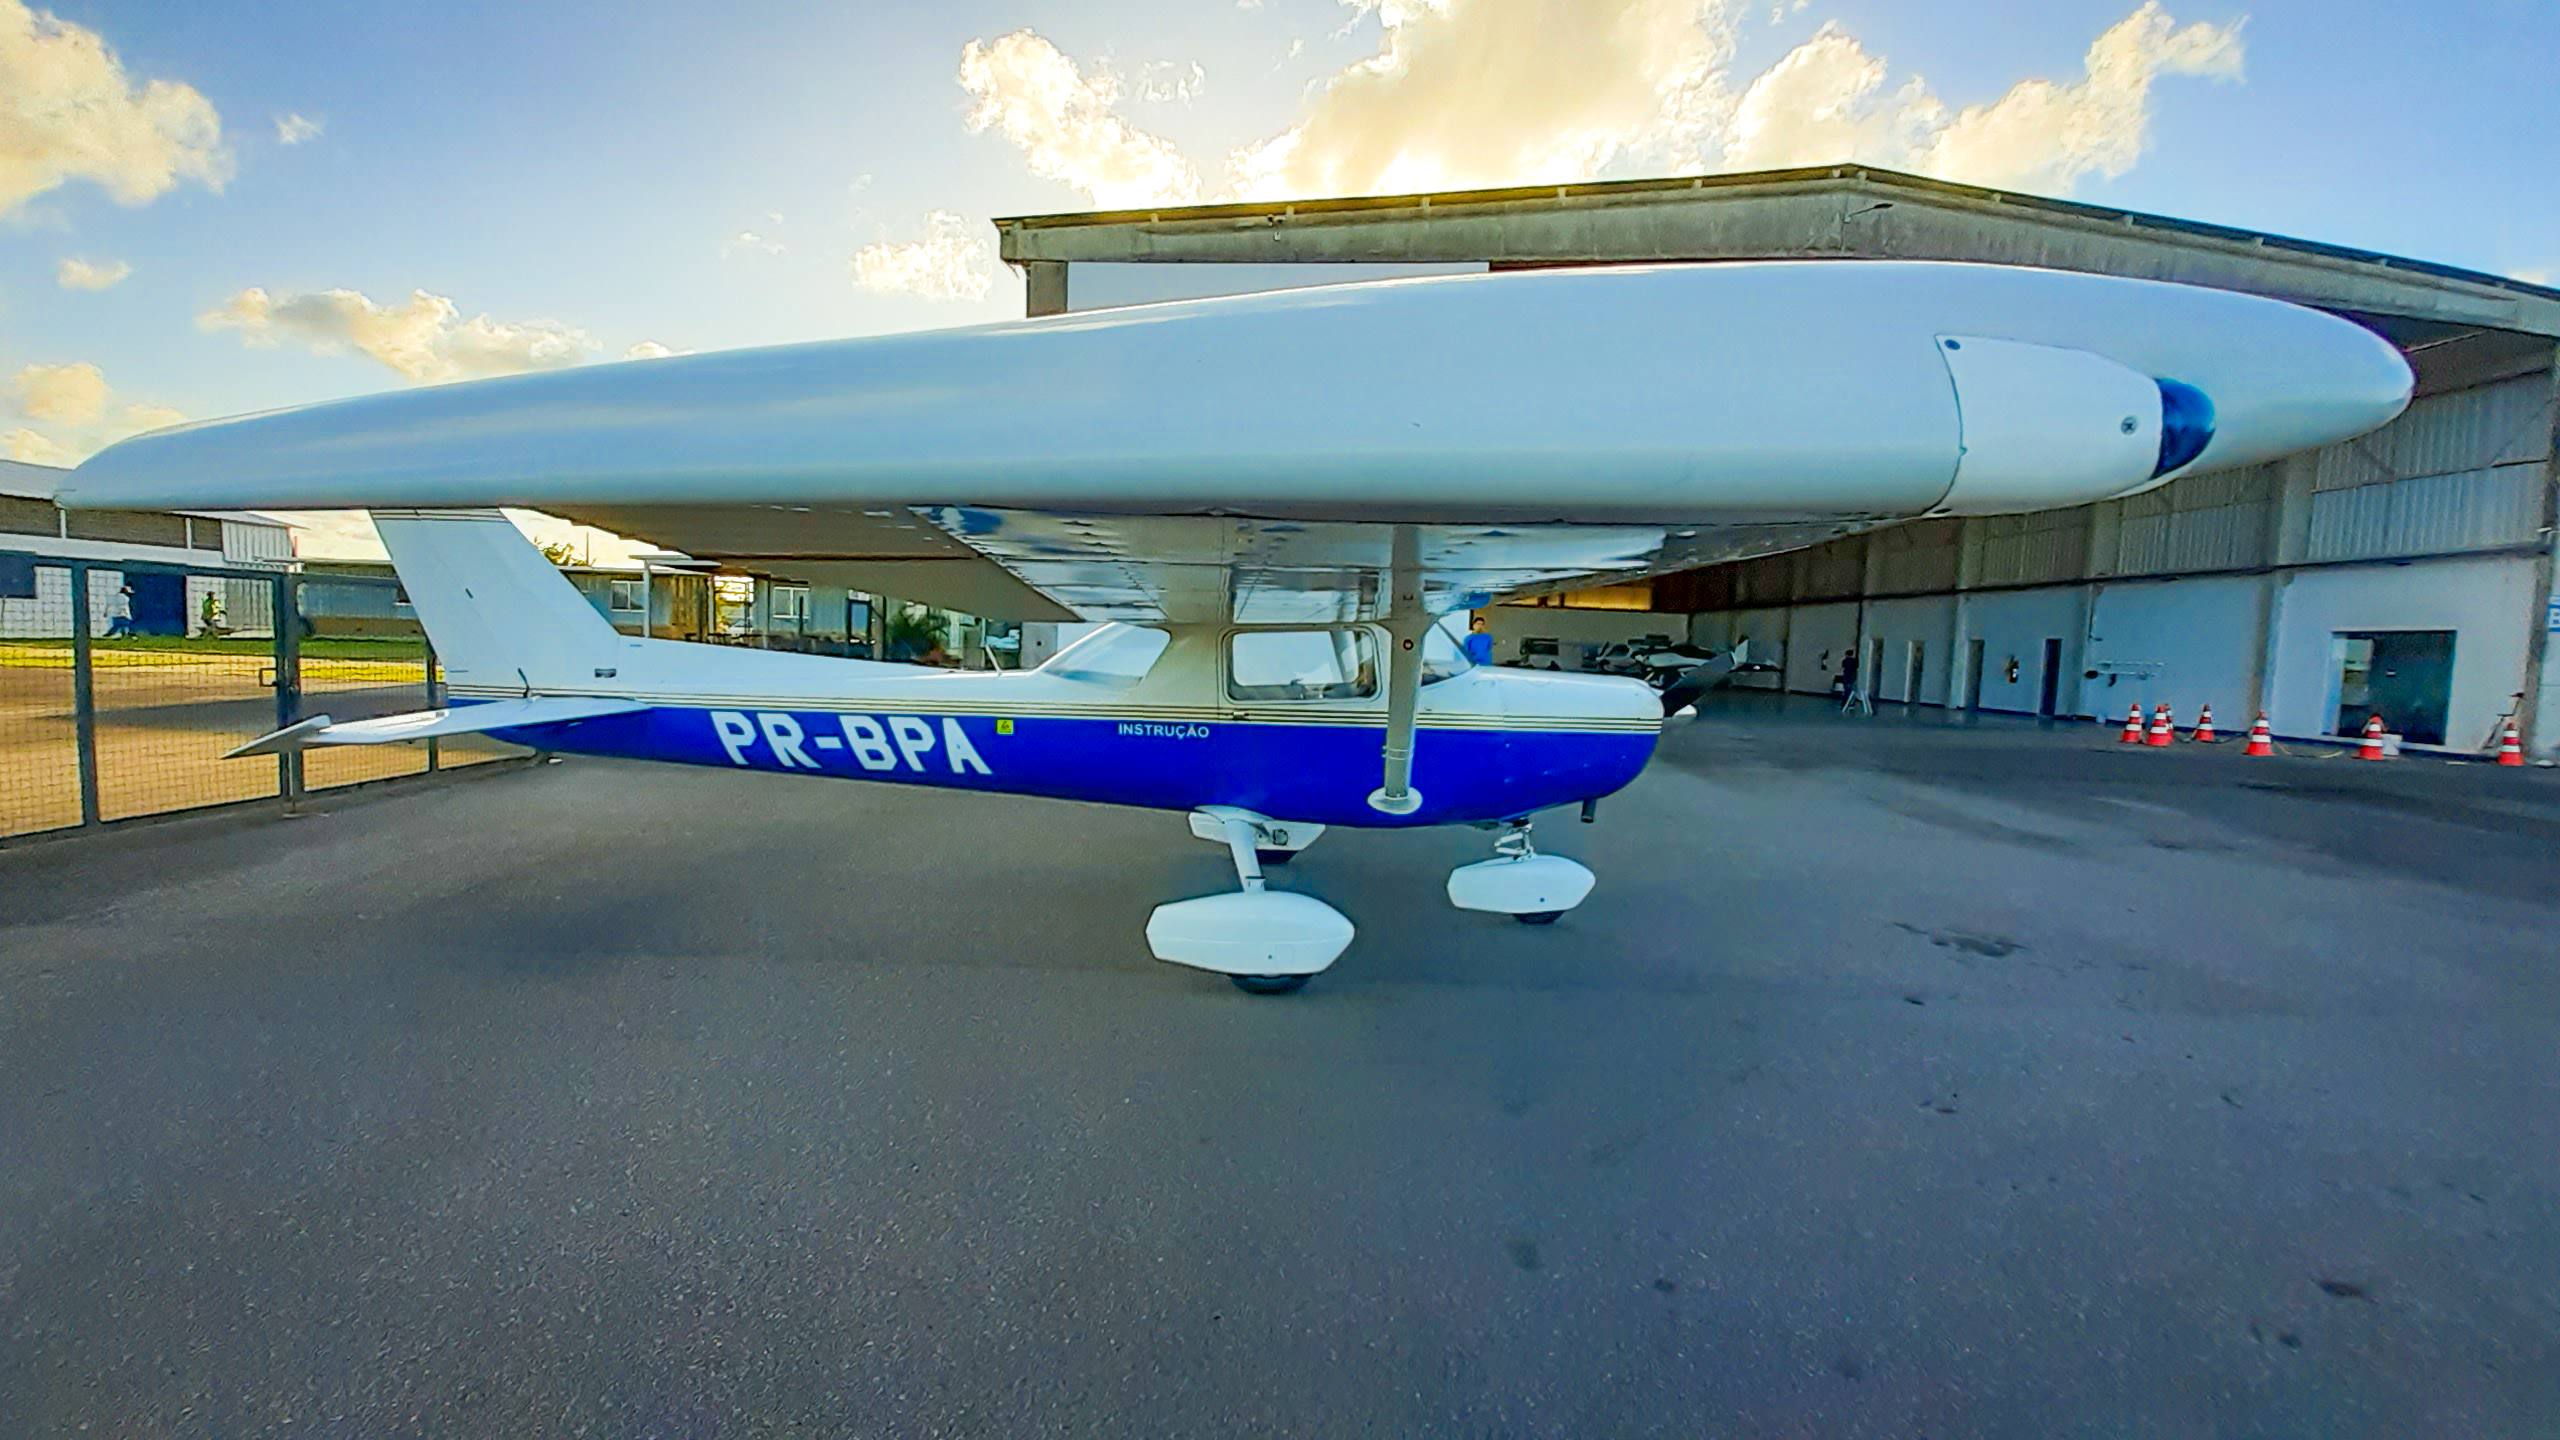 PR-BPA – Cessna C152 – Aeroclube de Pernambuco